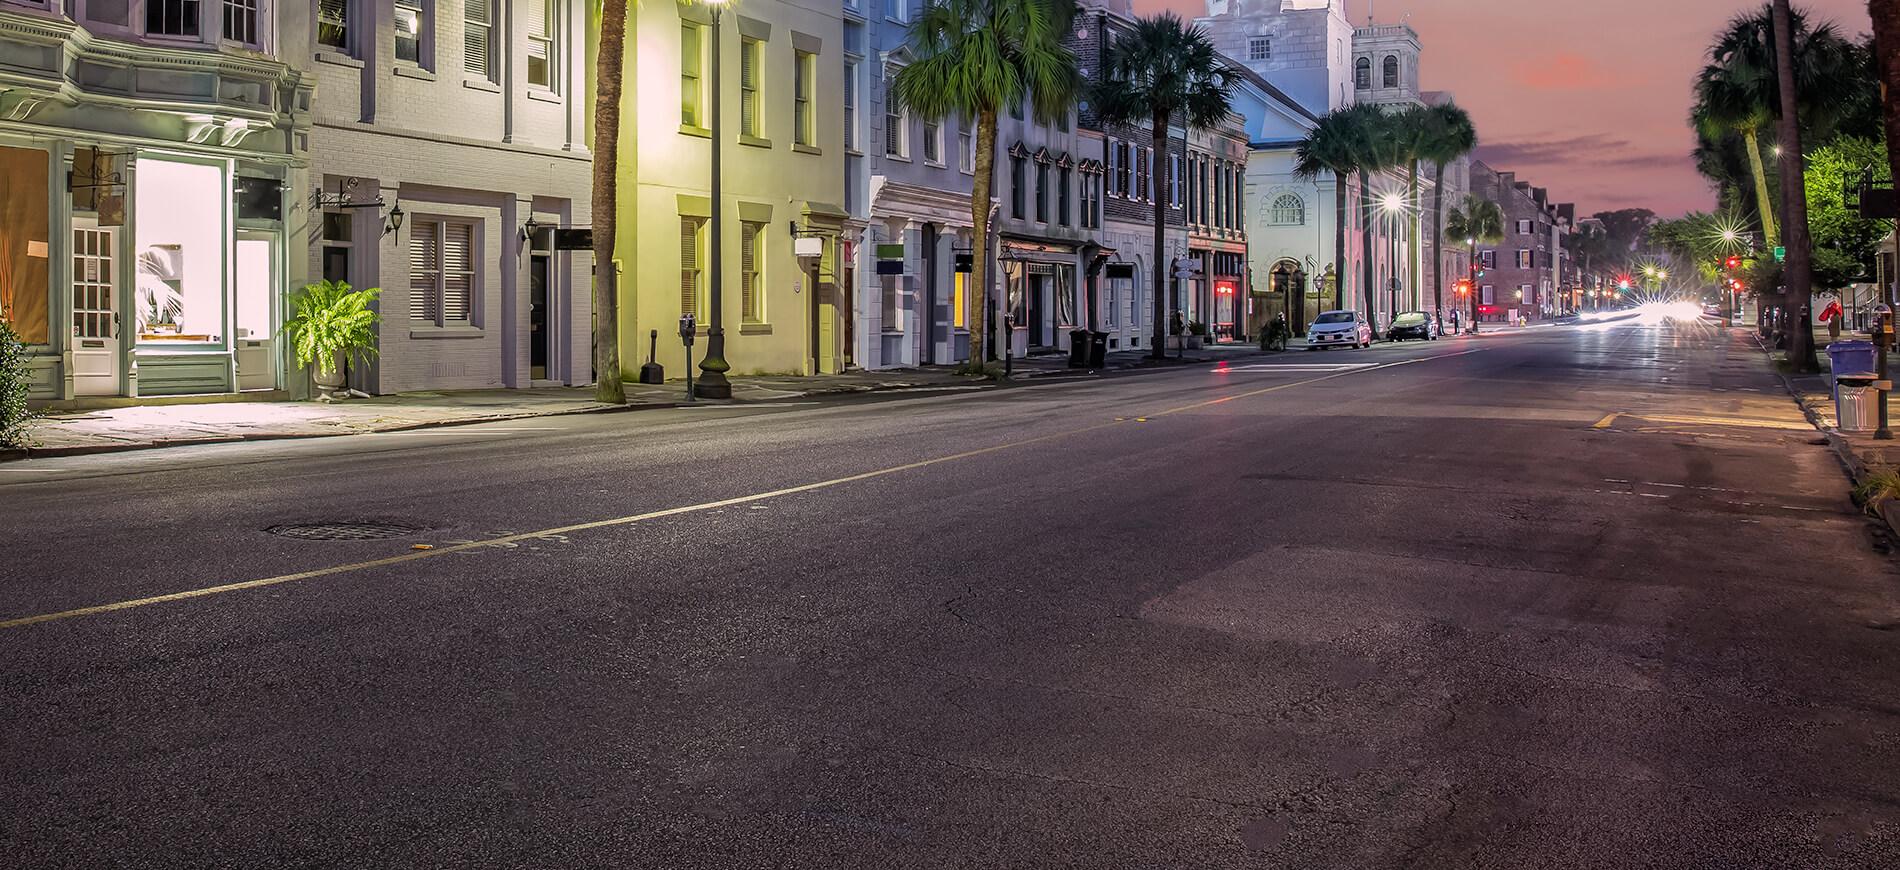 empty florida city street at sunset